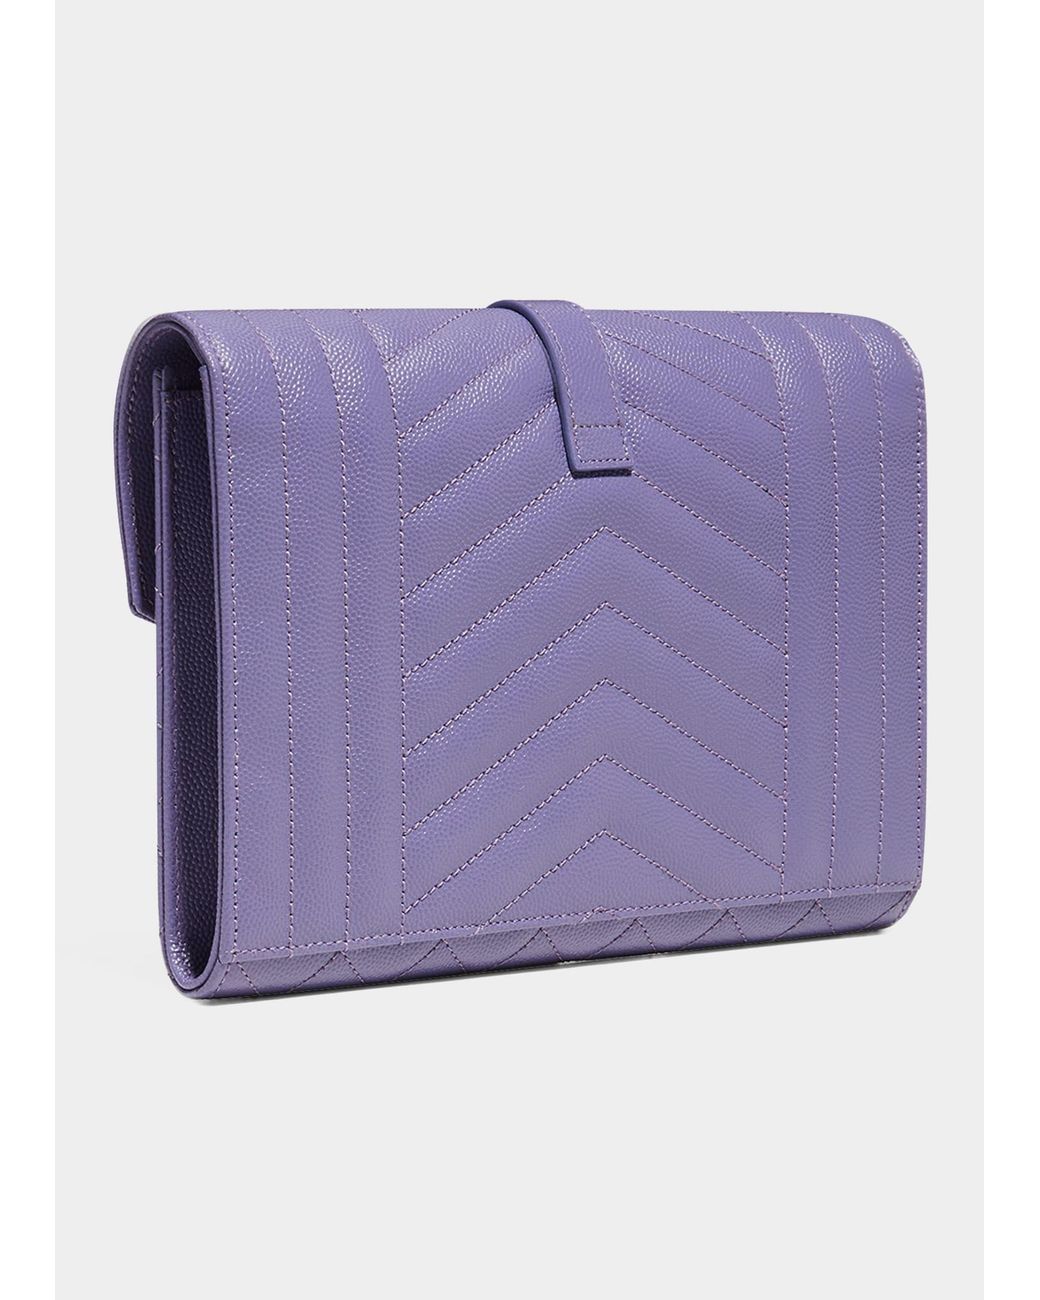 Saint Laurent Ysl Monogram Quilted Envelope Clutch Bag in Purple